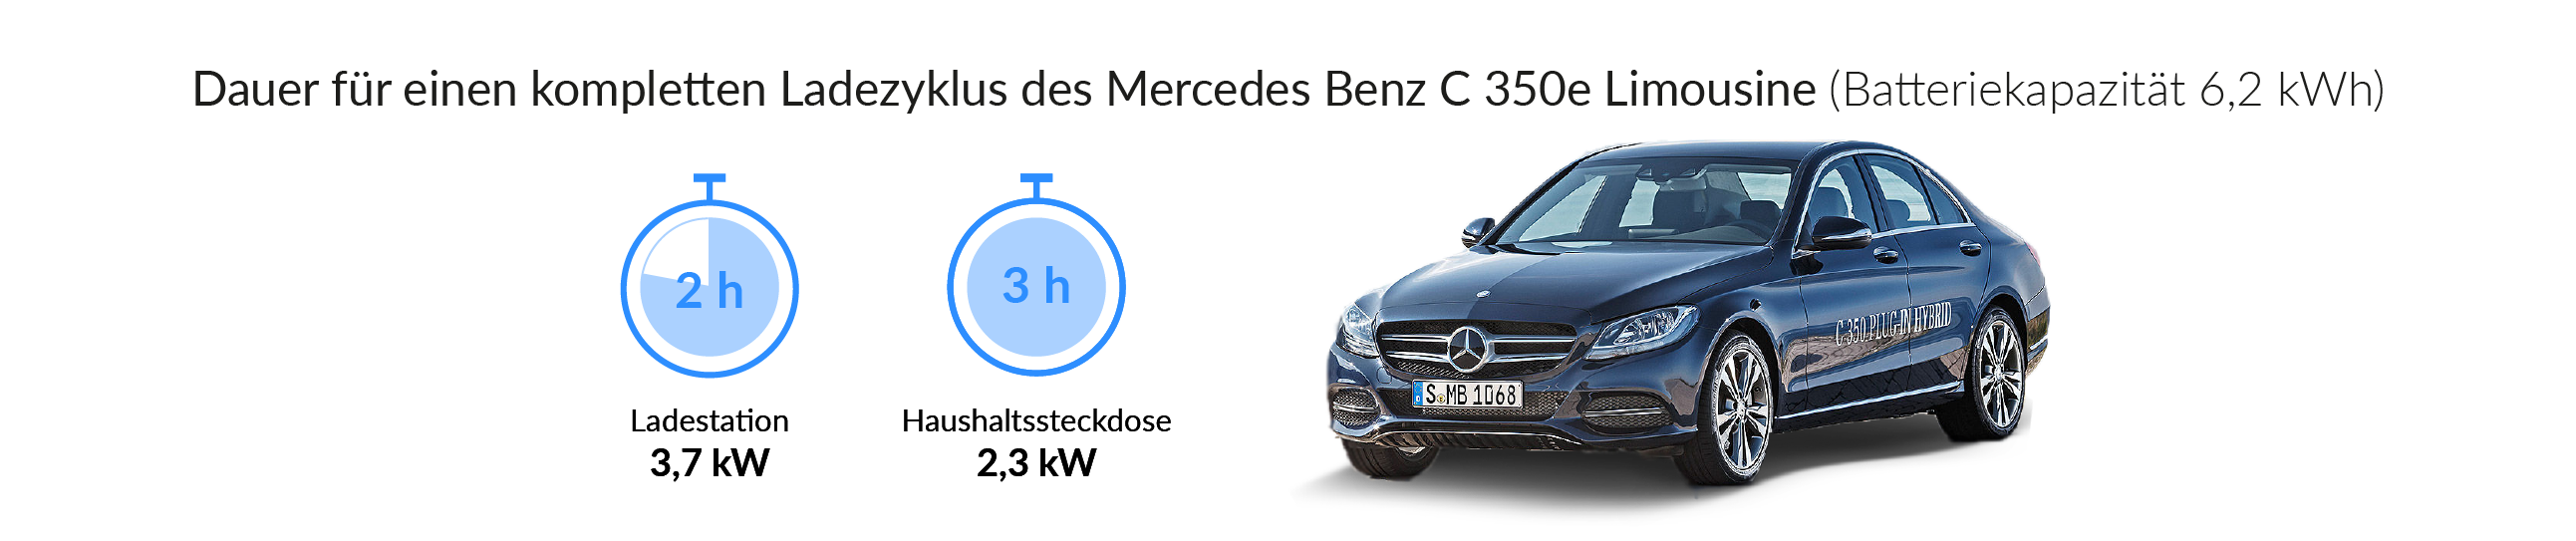 Ladezeiten des Mercedes C350e 4MATIC